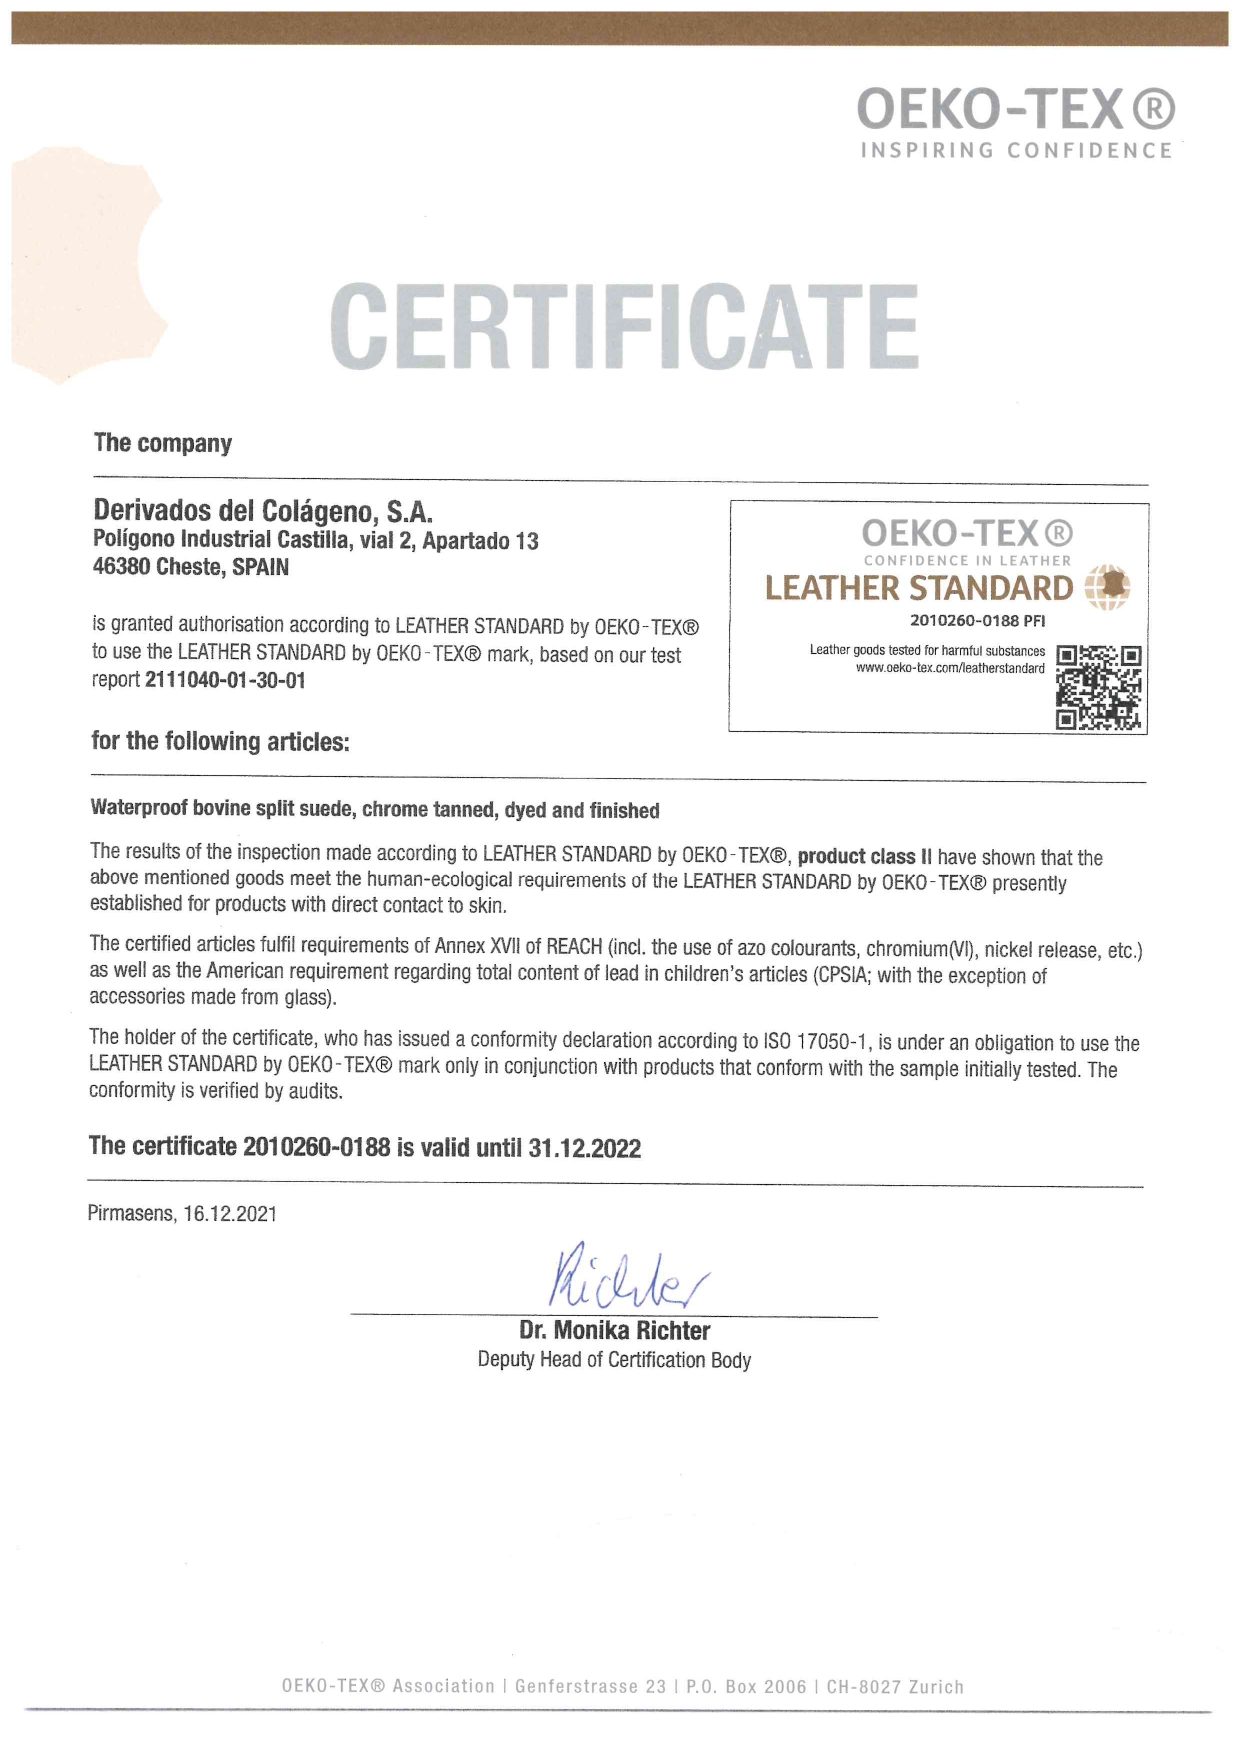 oeko_tex_certificate